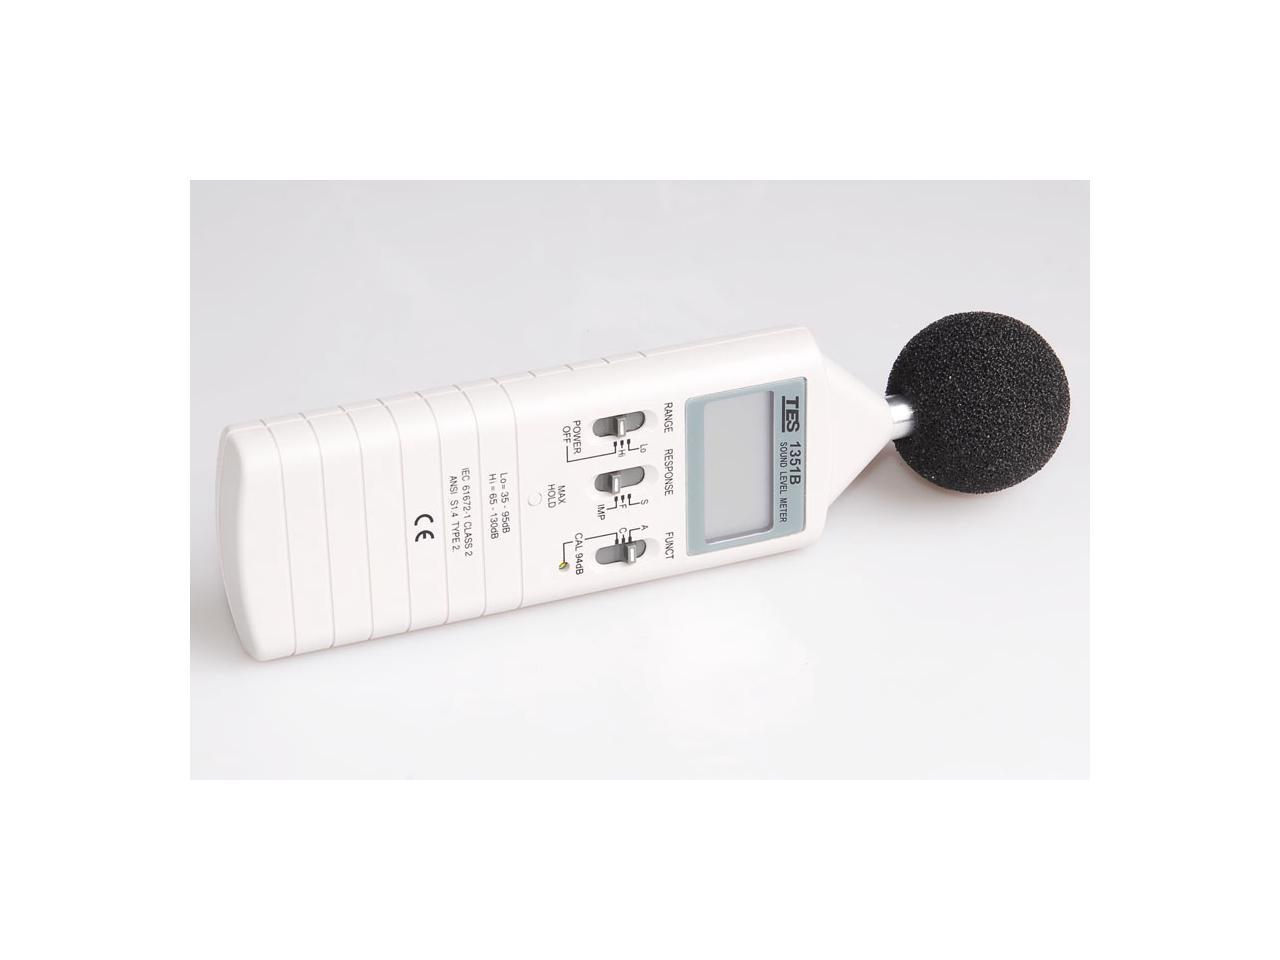 AZ8928 Digital Noise Meter Decibel Meter car Sound Level Meter Sound Level Meter Low Frequency Noise Meter 